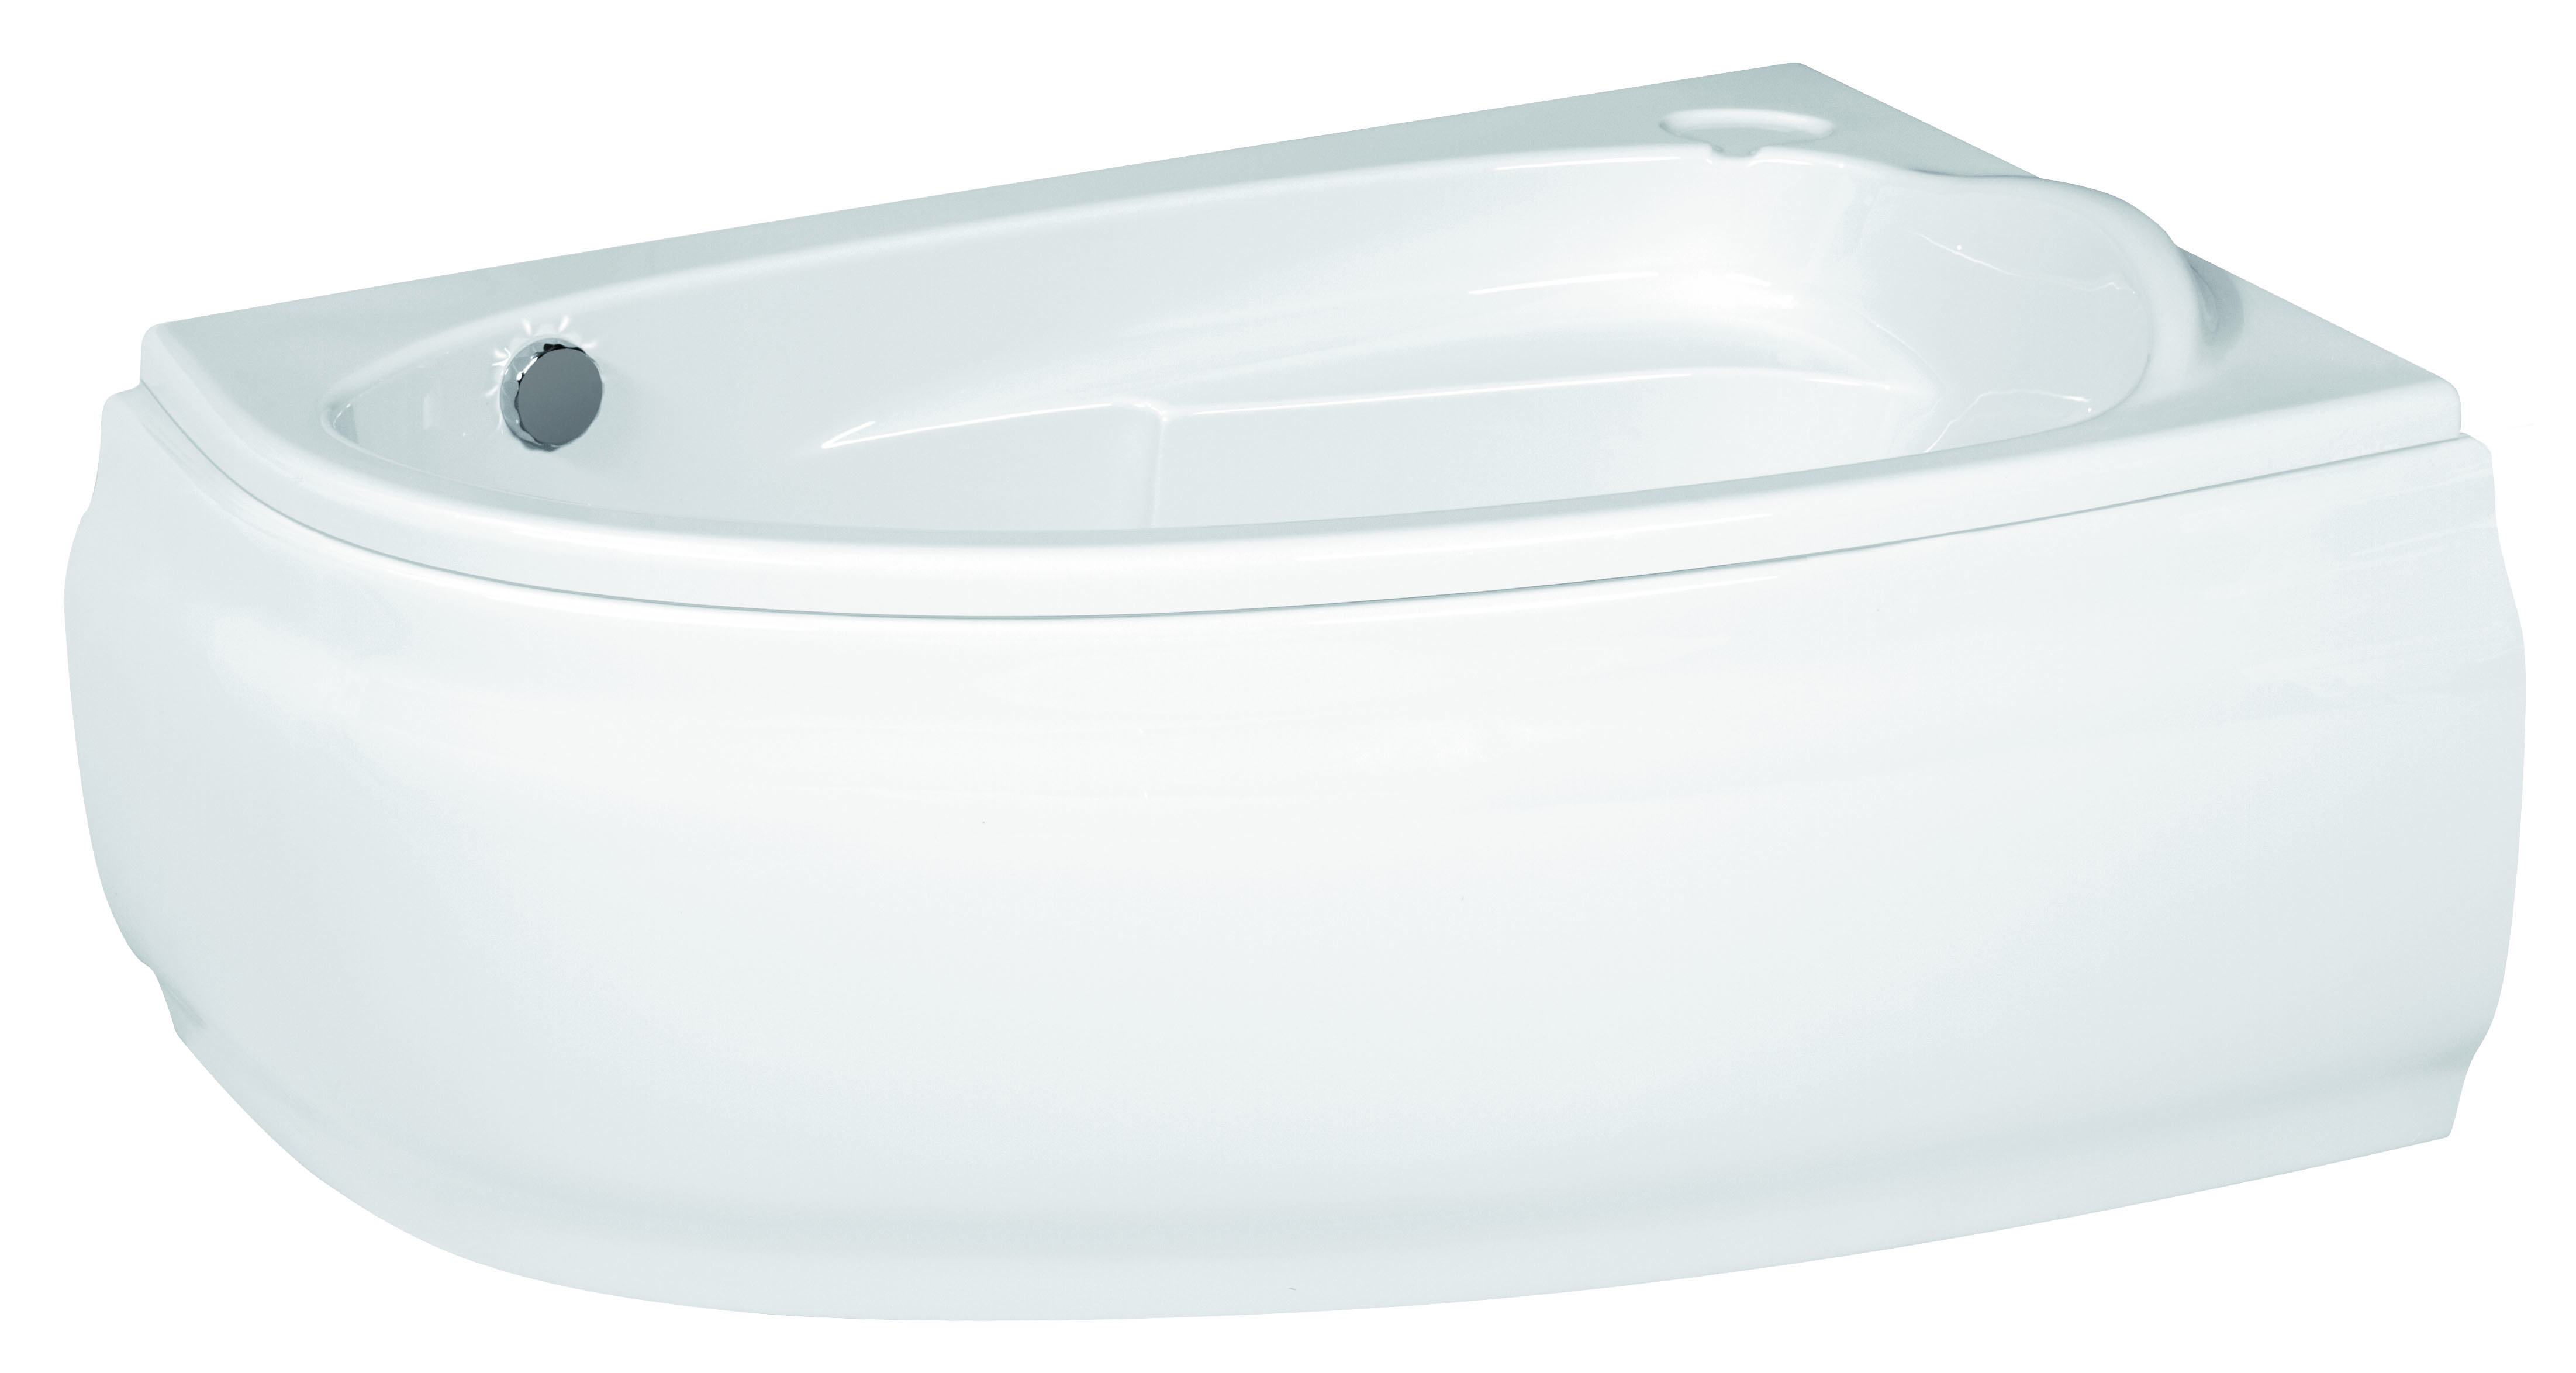 Акриловая ванна Cersanit Joanna 140x90 R ультра белая, размер 140x90, цвет белый 63335 - фото 2